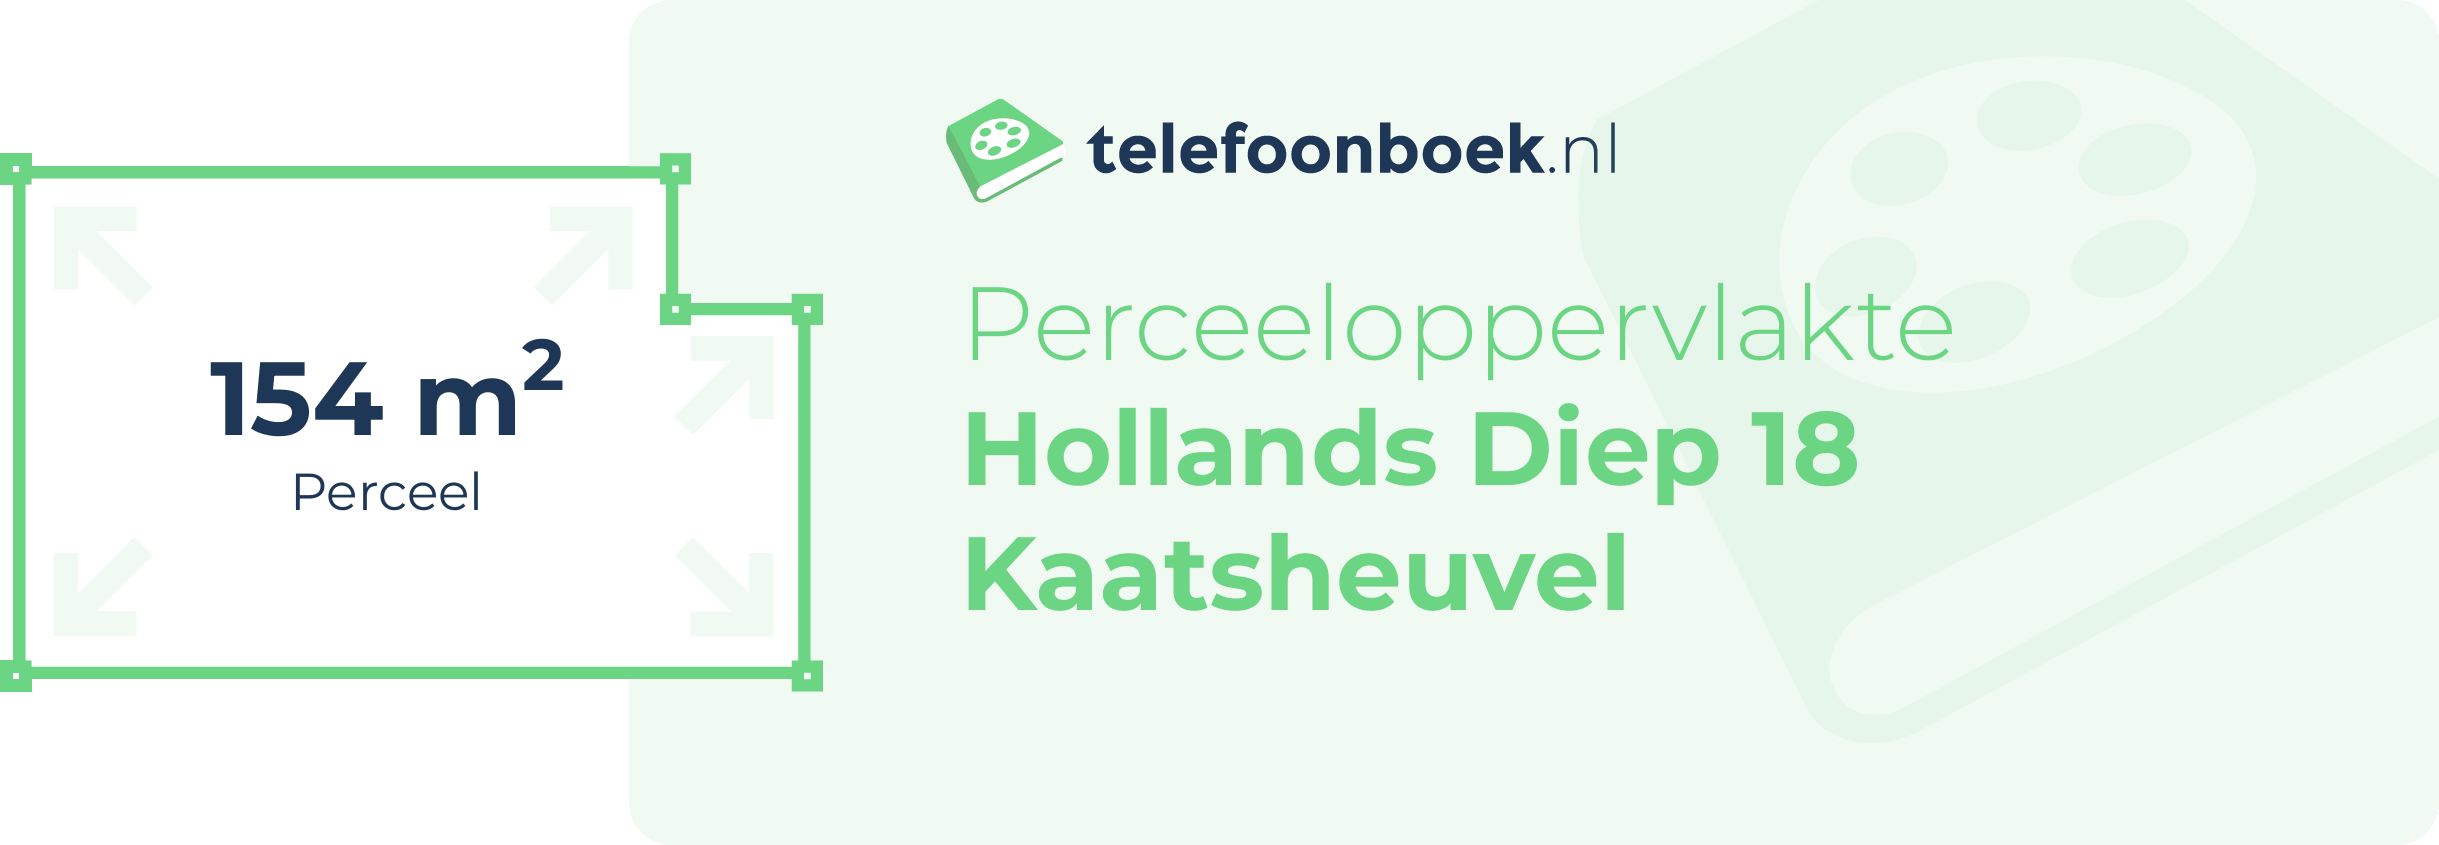 Perceeloppervlakte Hollands Diep 18 Kaatsheuvel